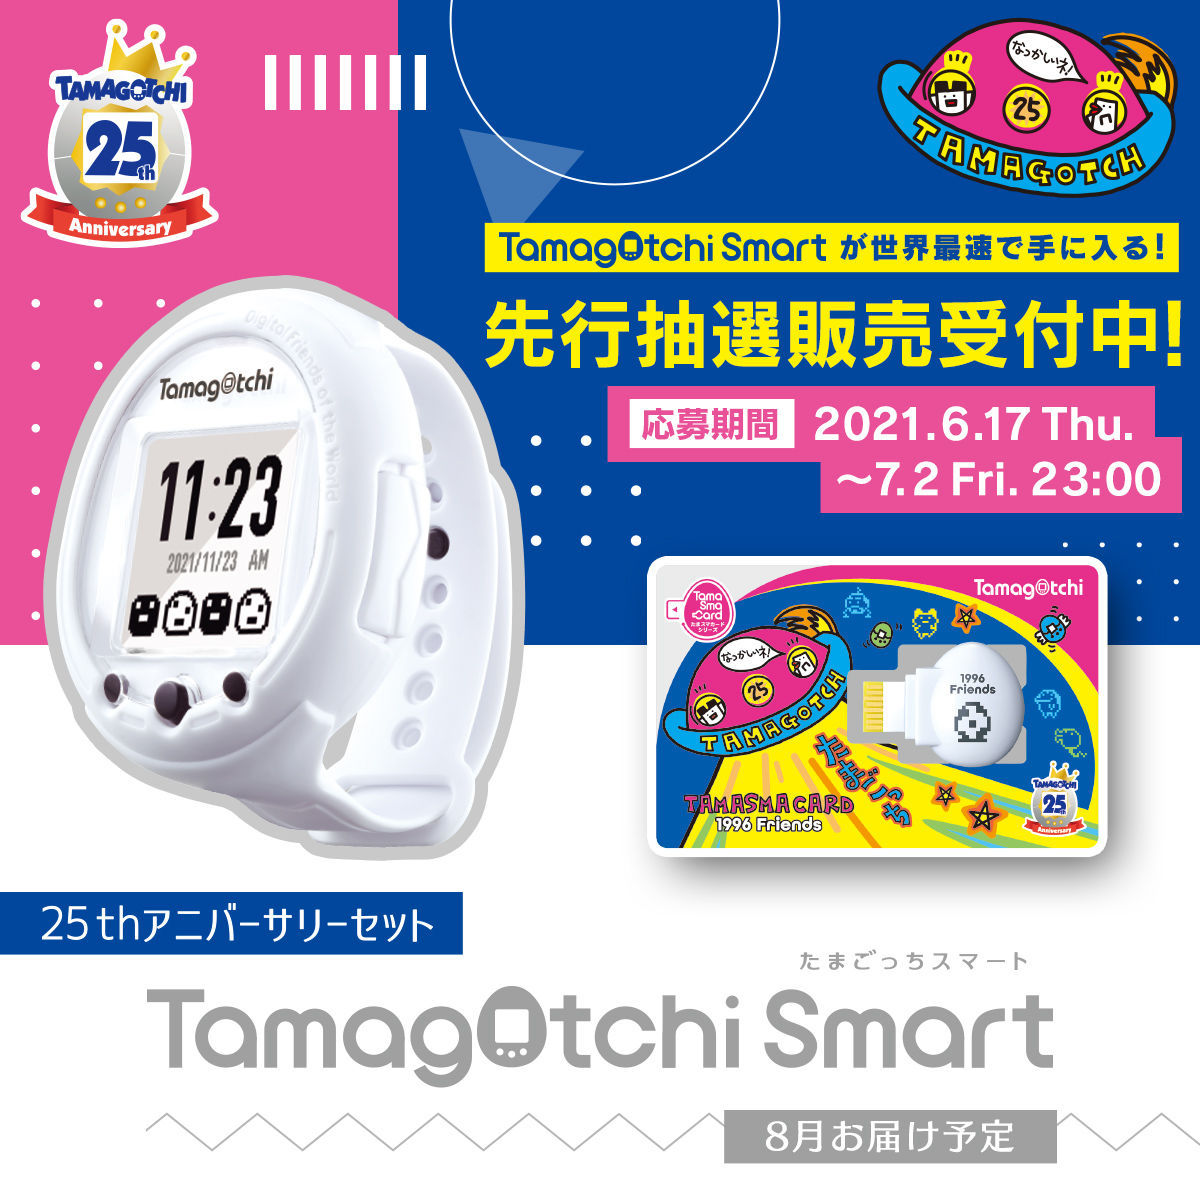 Bandai Tamagotchi Smart 25th Anniversary CoralPink or Mintblue w/ Neck Strap JPN 